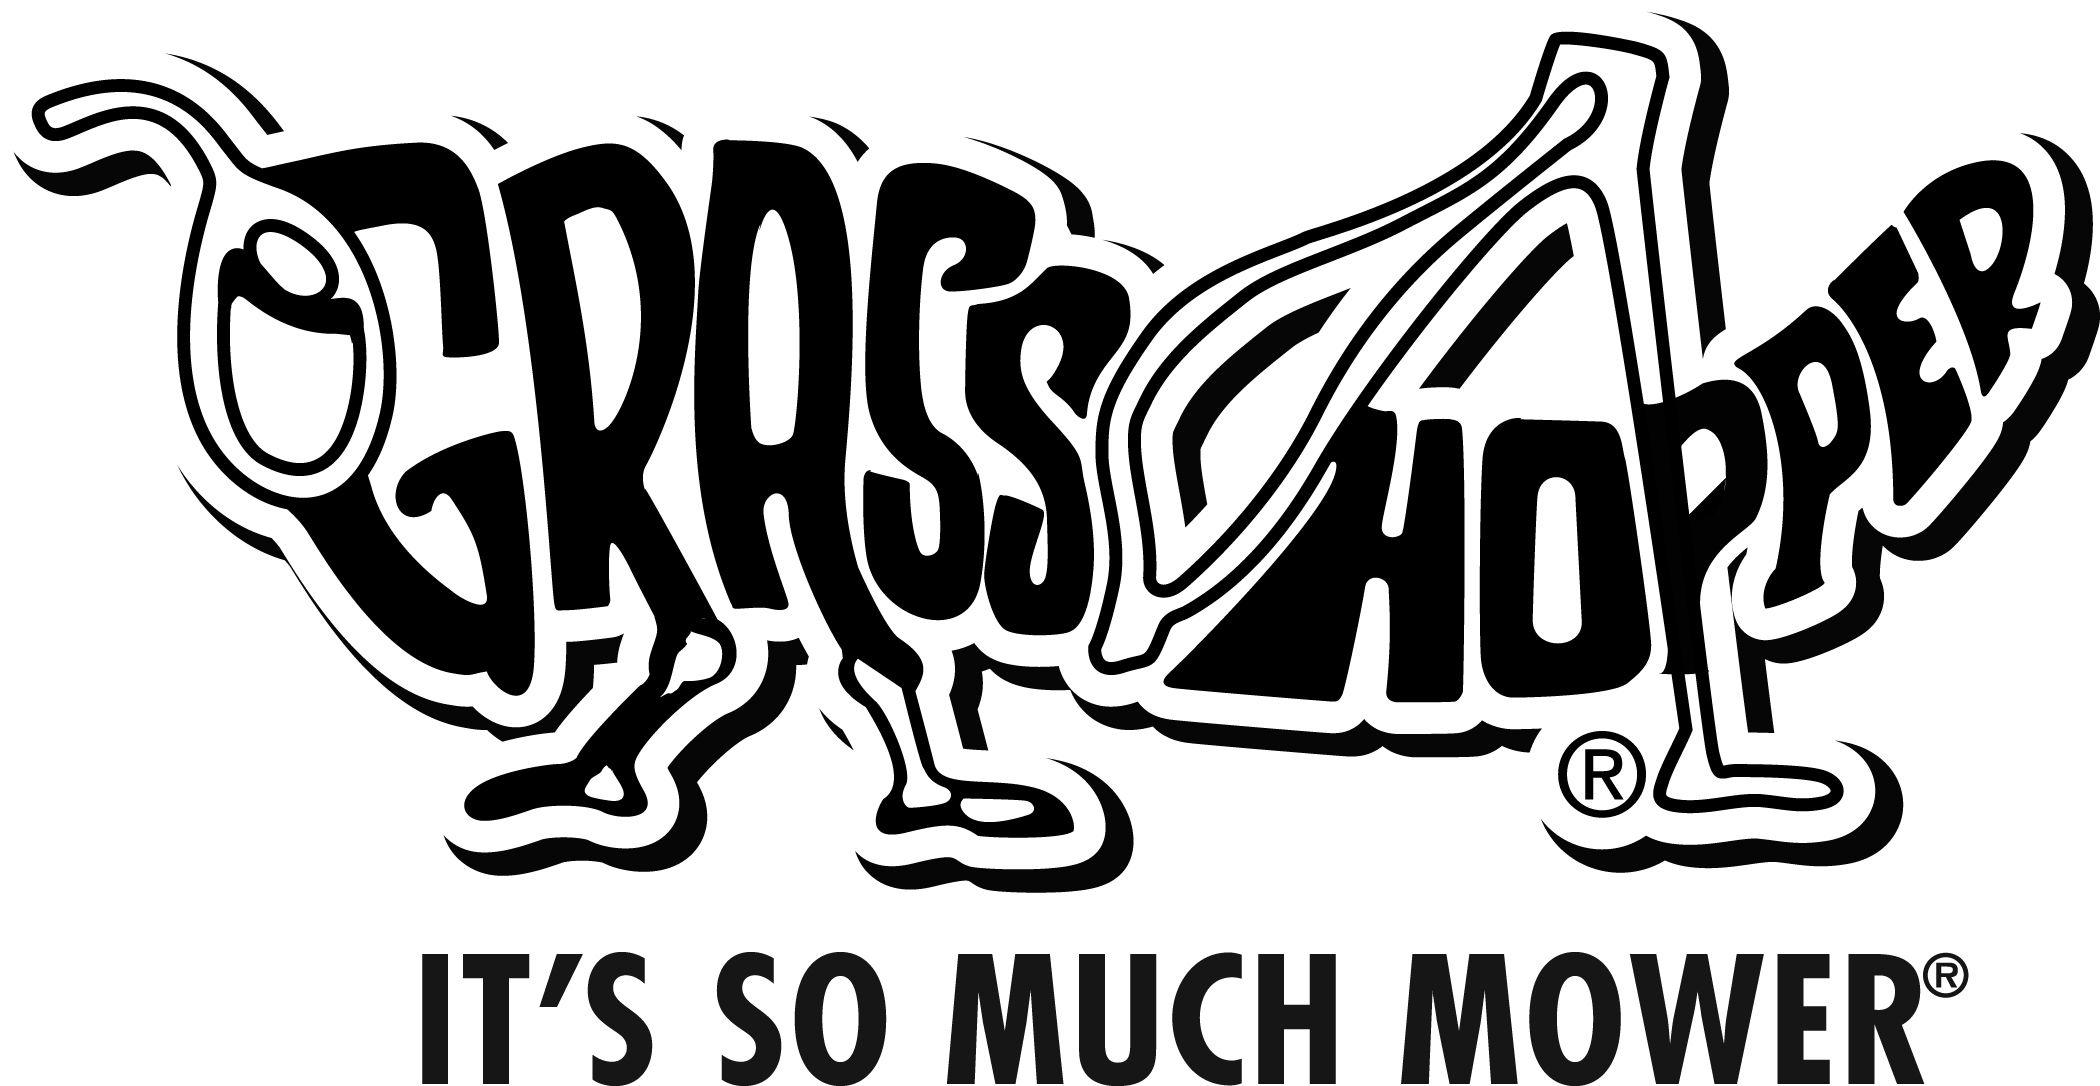 Grasshopper Logo - Grasshopper Mowers | Logos